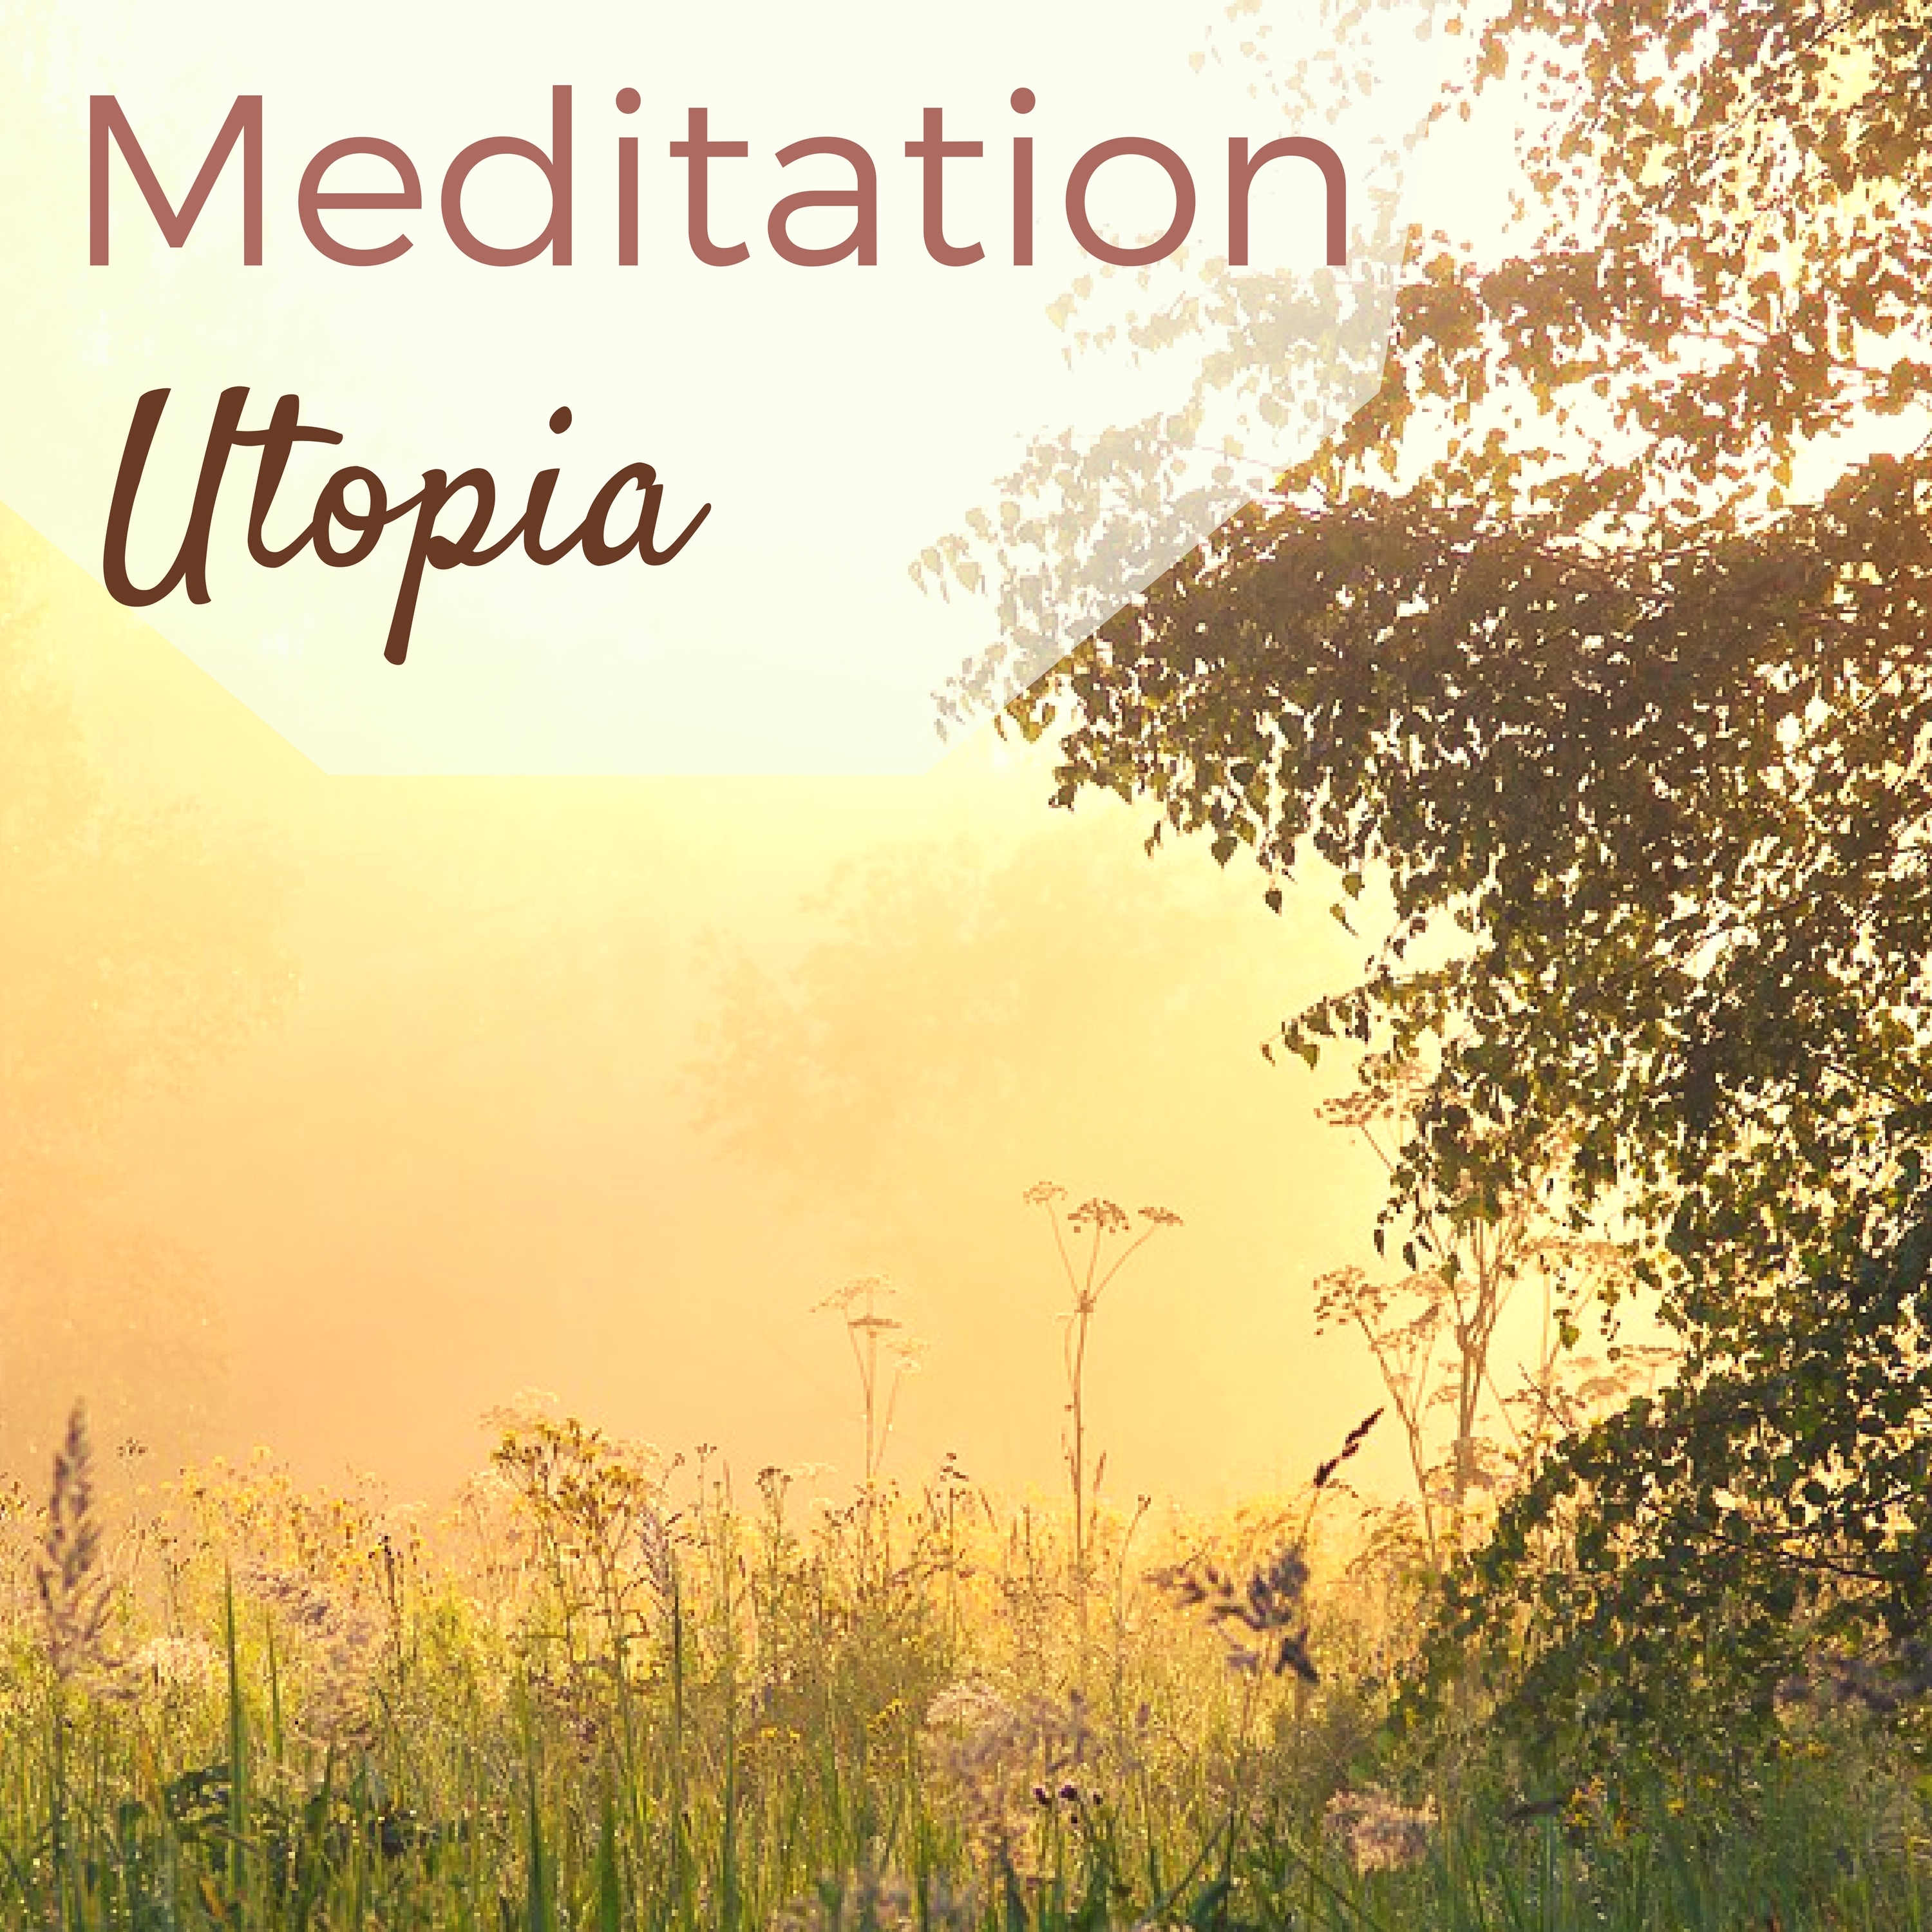 Meditation Utopia